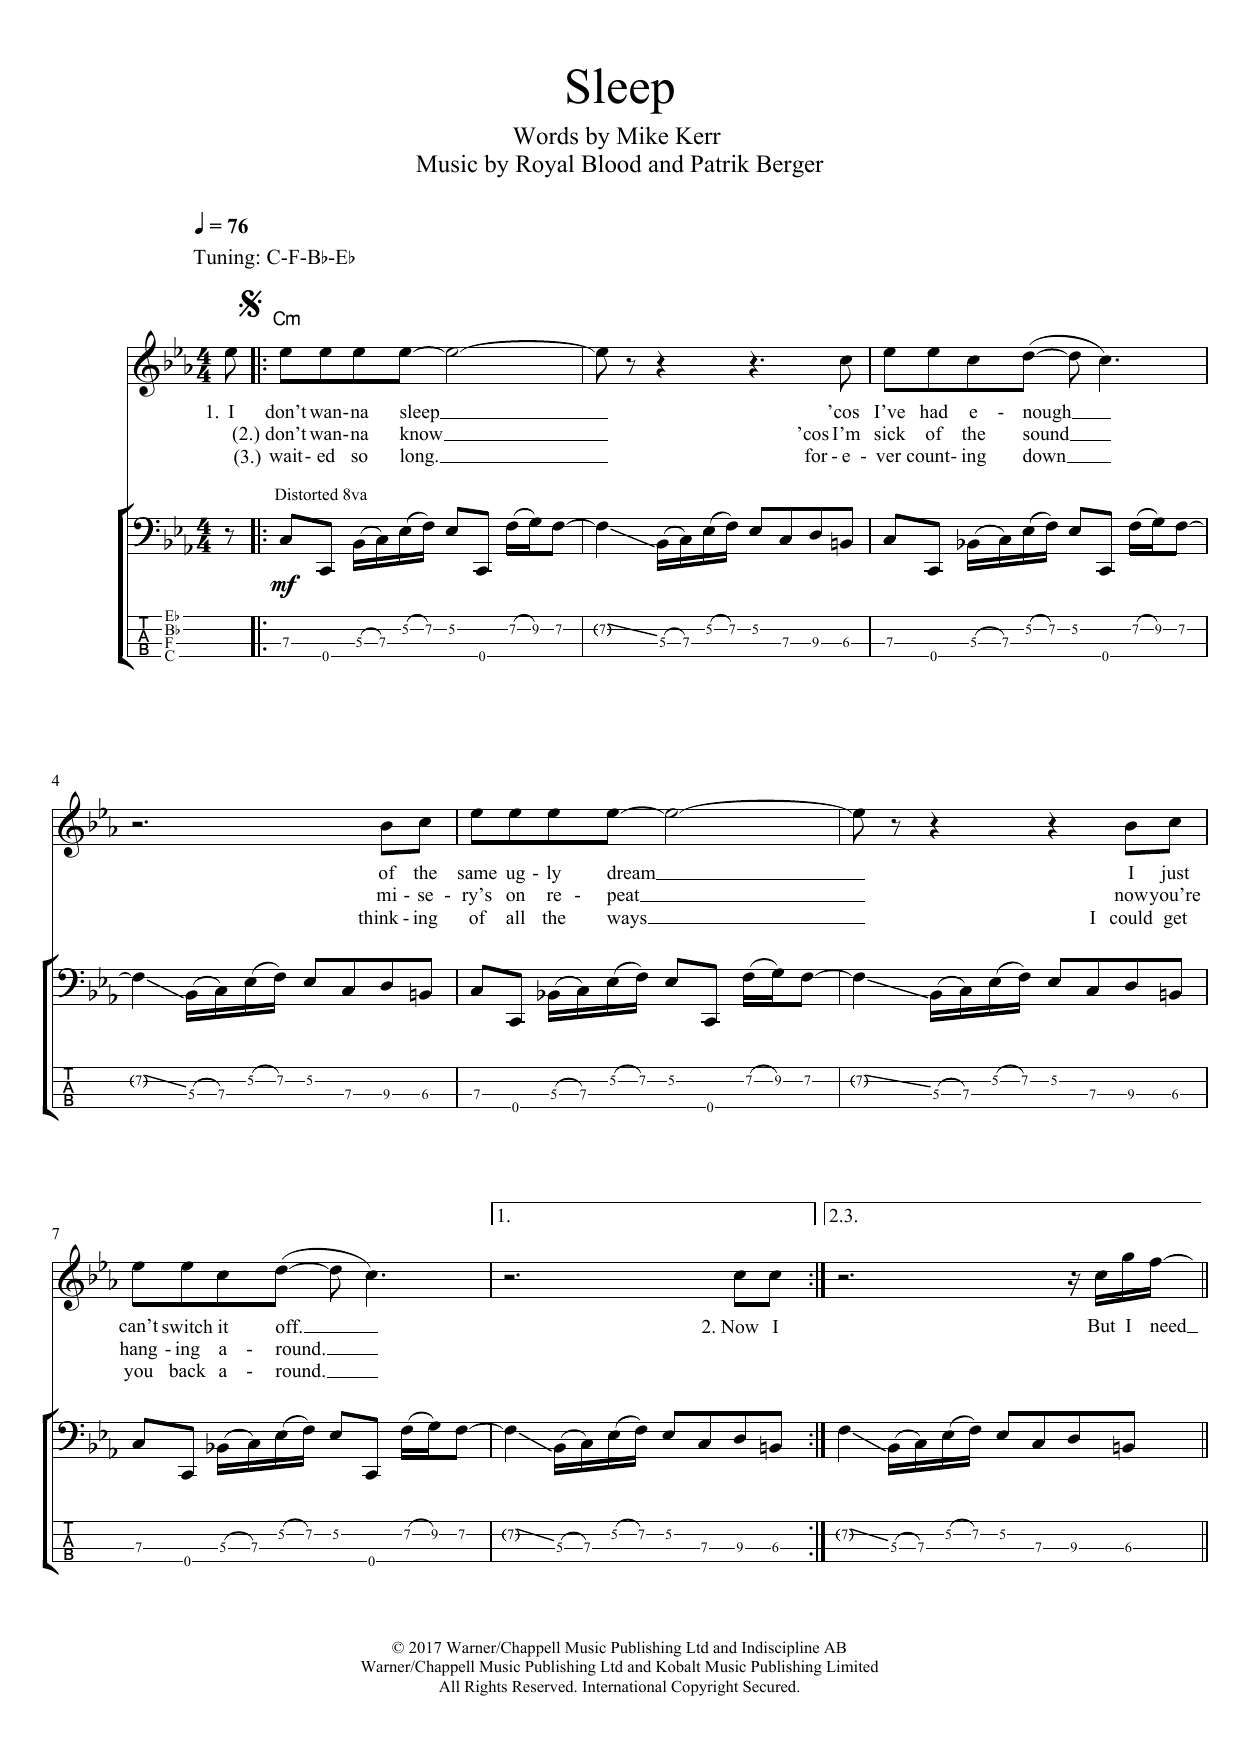 Royal Blood Sleep sheet music notes and chords. Download Printable PDF.